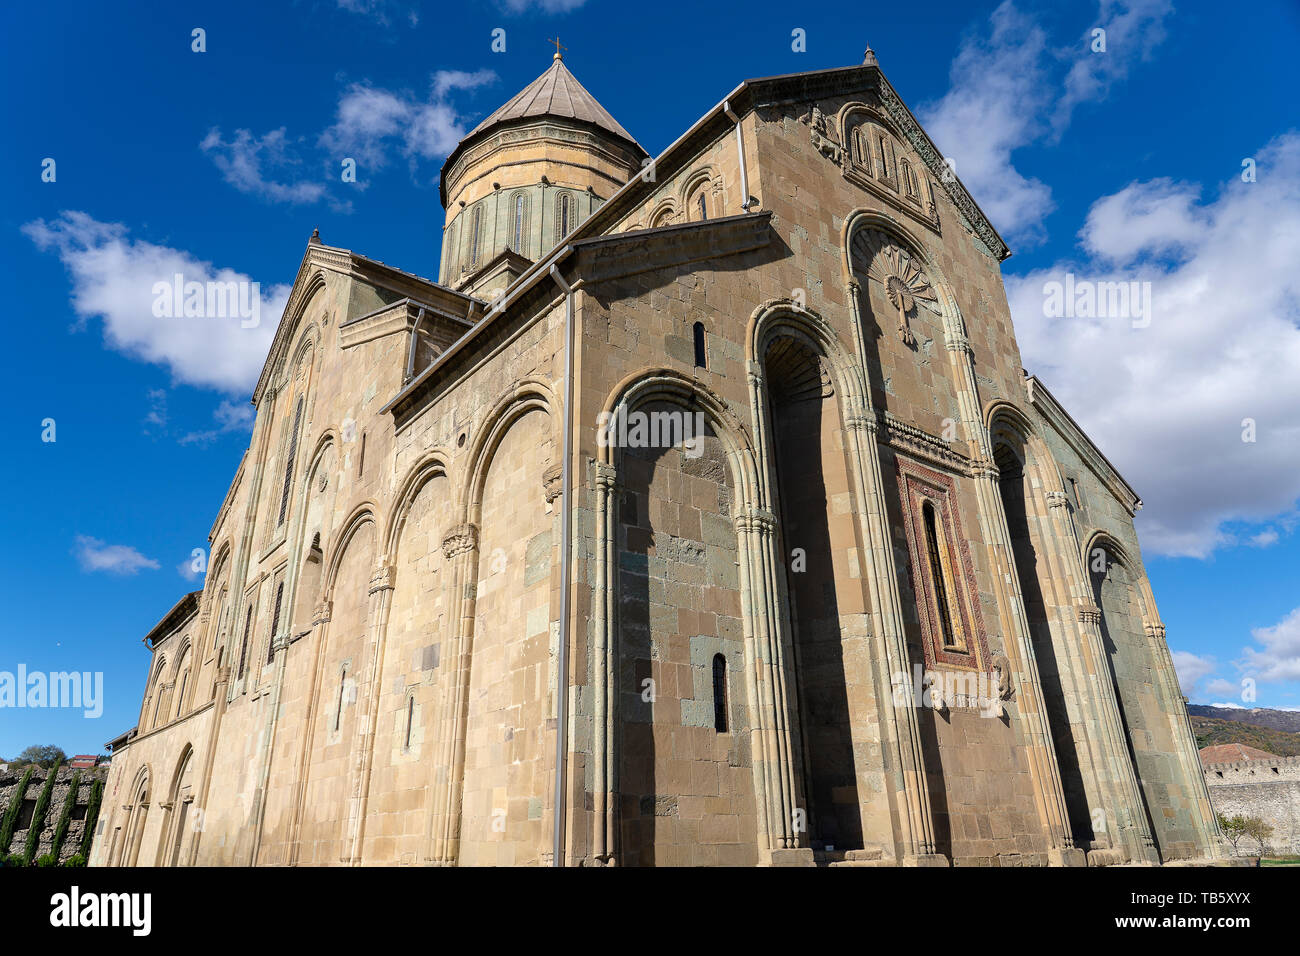 Old Orthodox cathedral in historical town Mtskheta near Tbilisi, Georgia. Autumn sunny day. Stock Photo